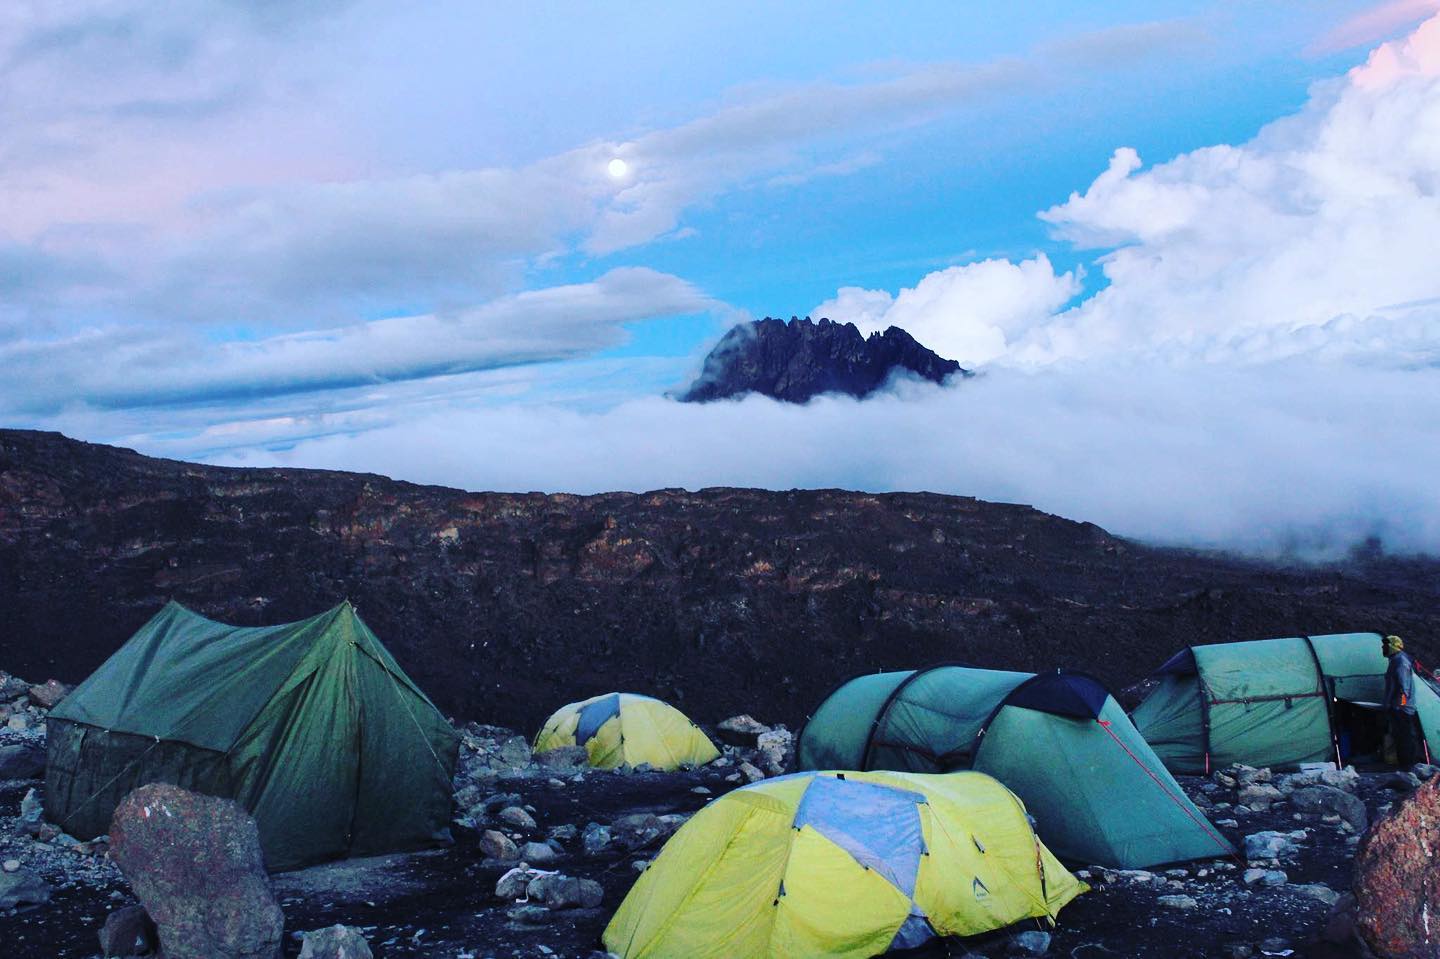 Choose to climb Mount Kilimanjaro